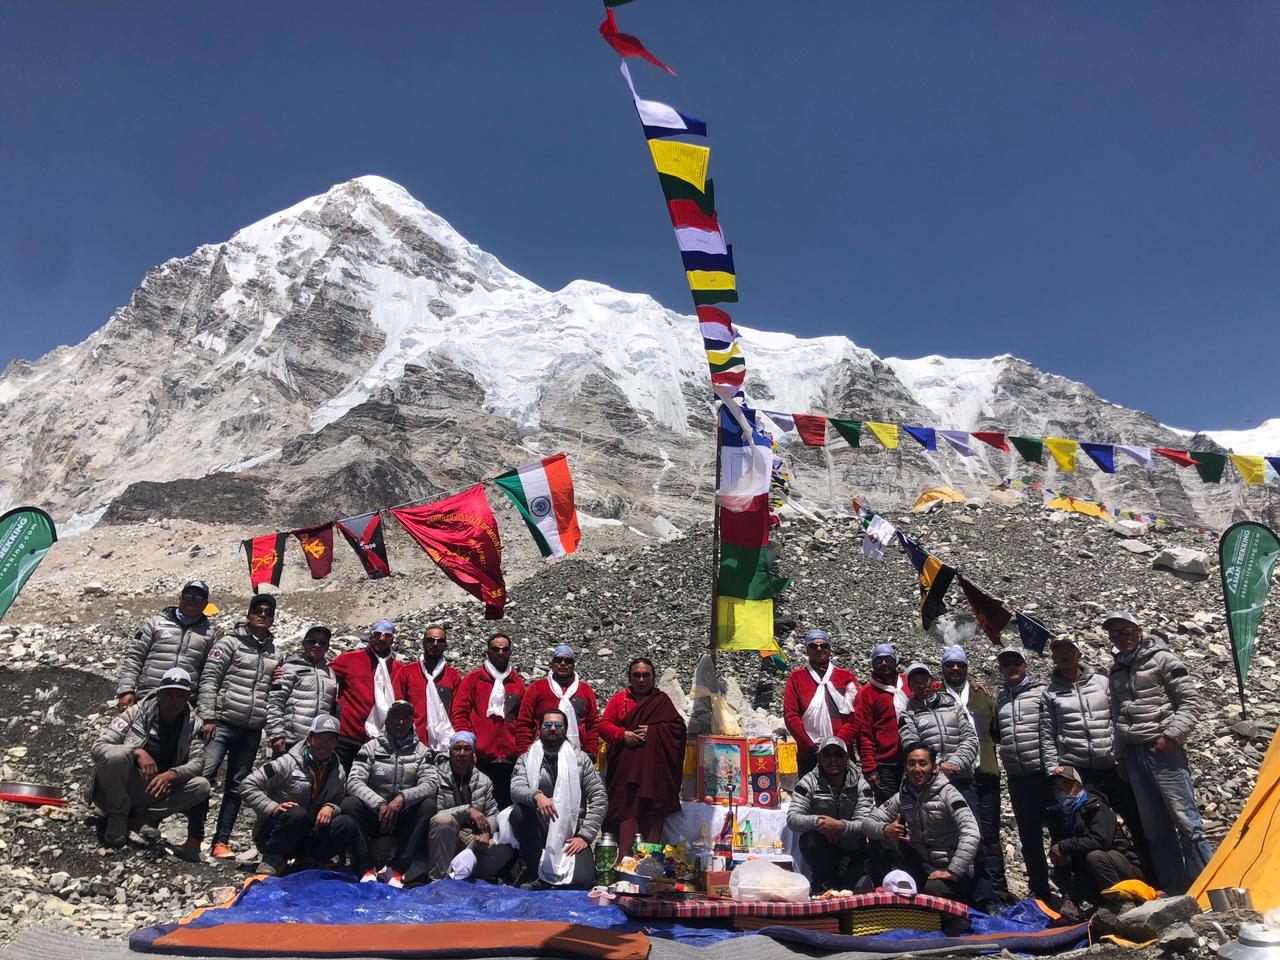 Team's customary ceremony before heading to summit Mt. Everest